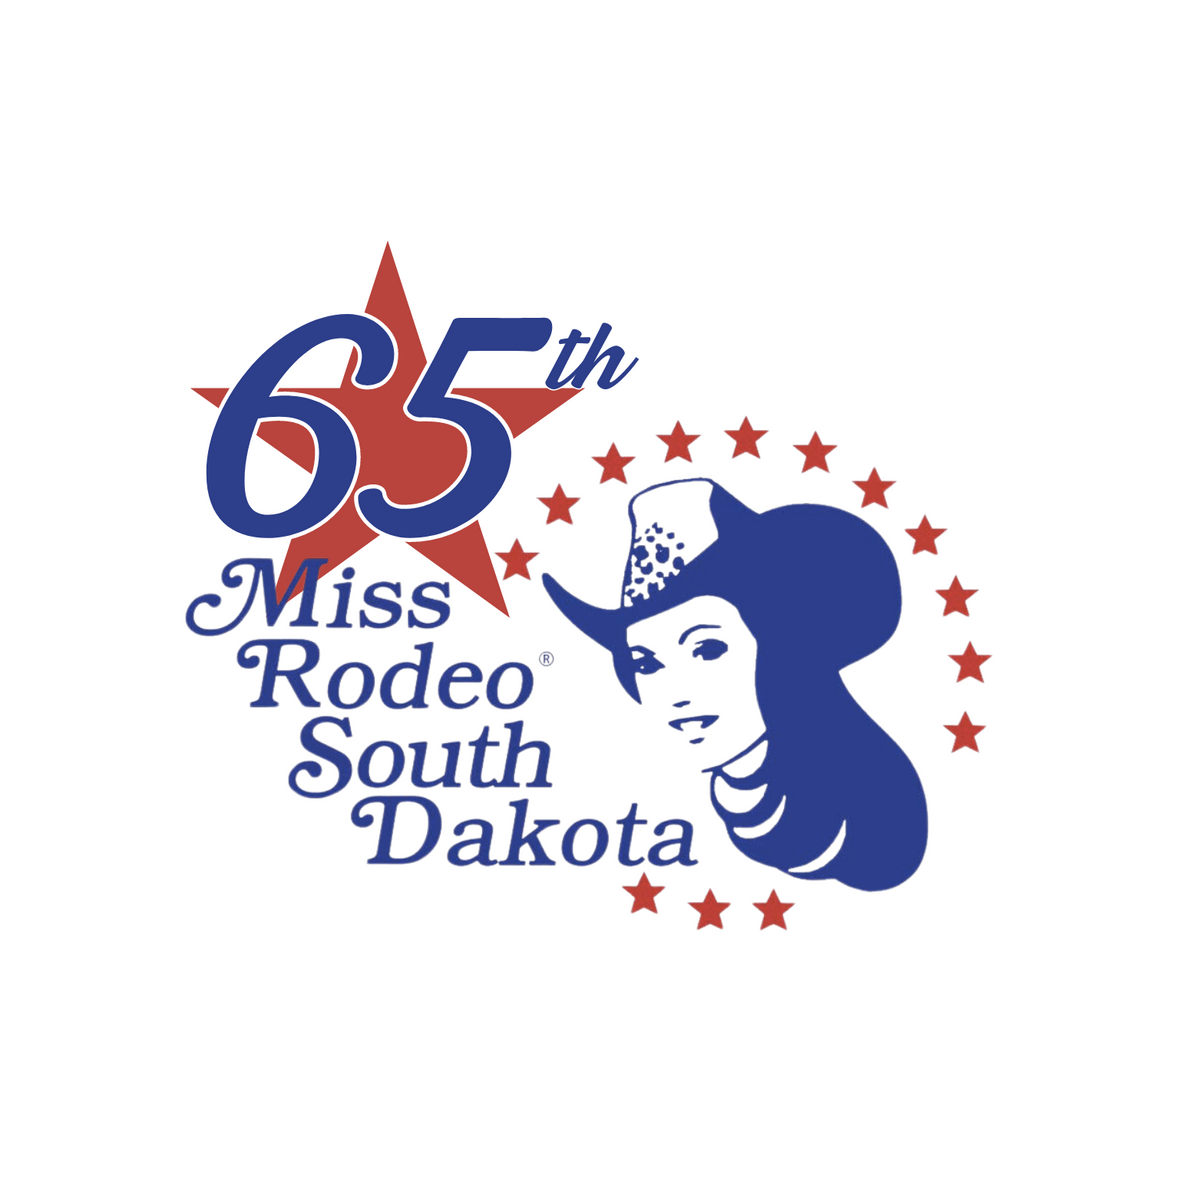 65th Miss Rodeo South Dakota